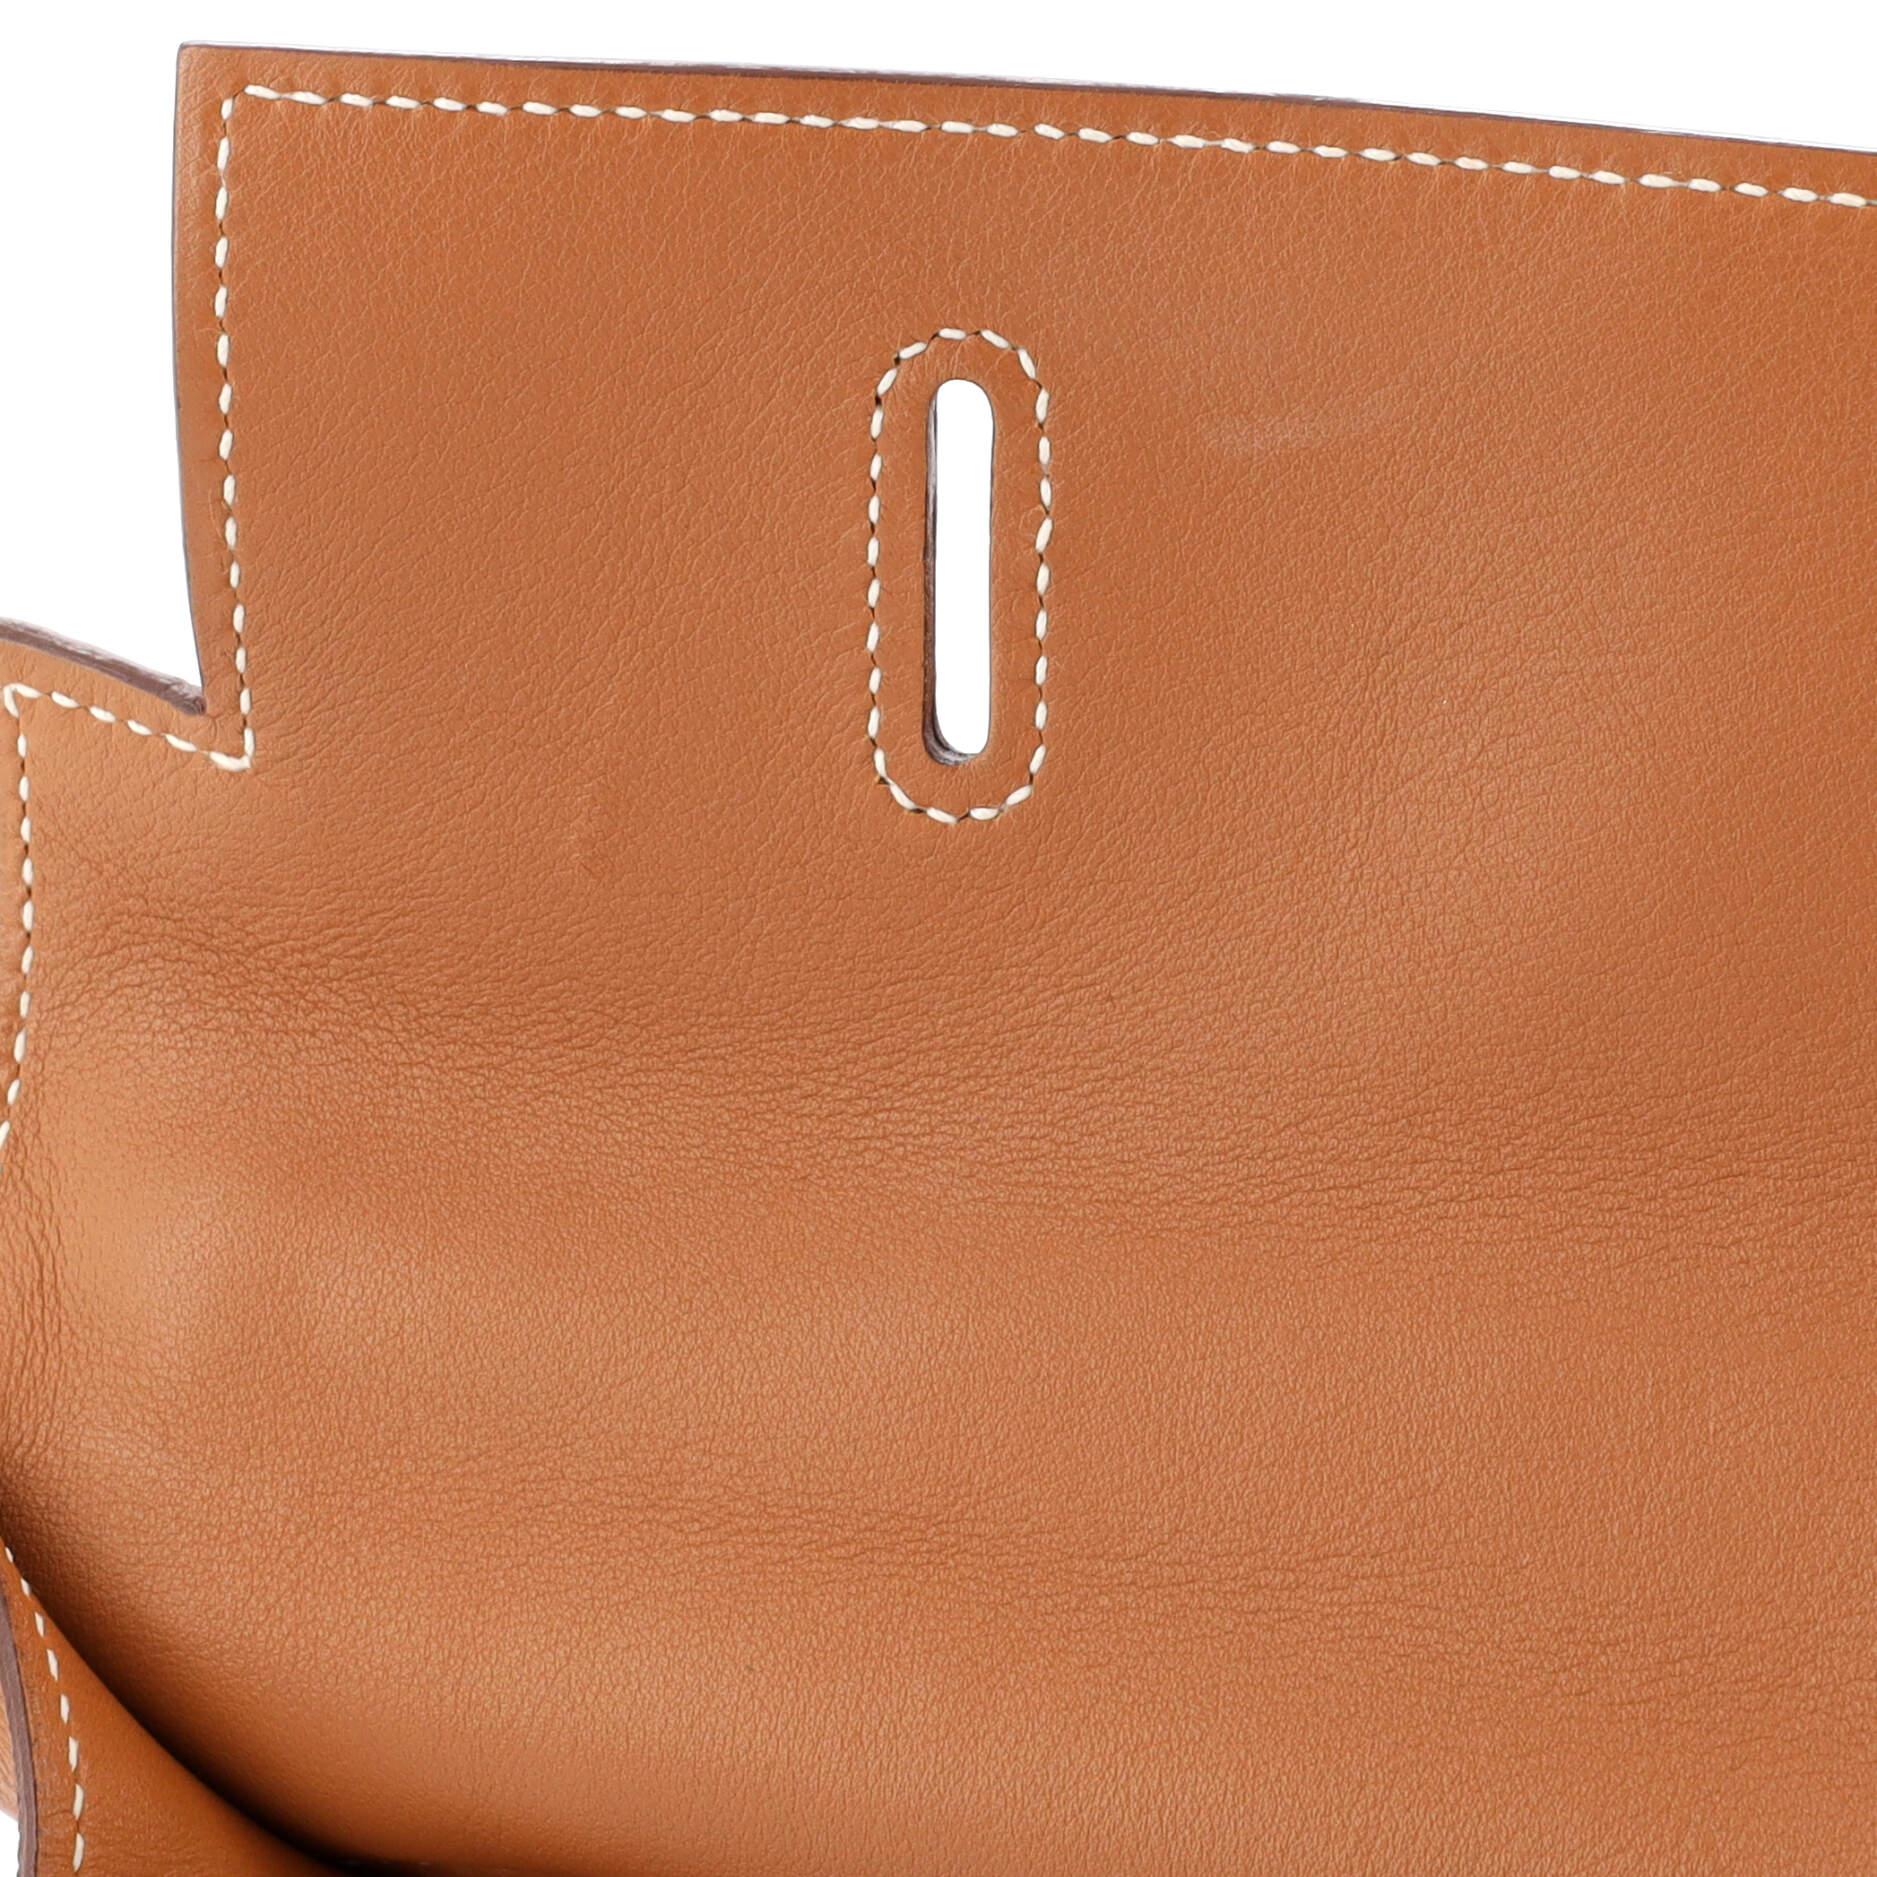 Hermes Kelly Flat Handbag Gold Swift with Palladium Hardware 35 4